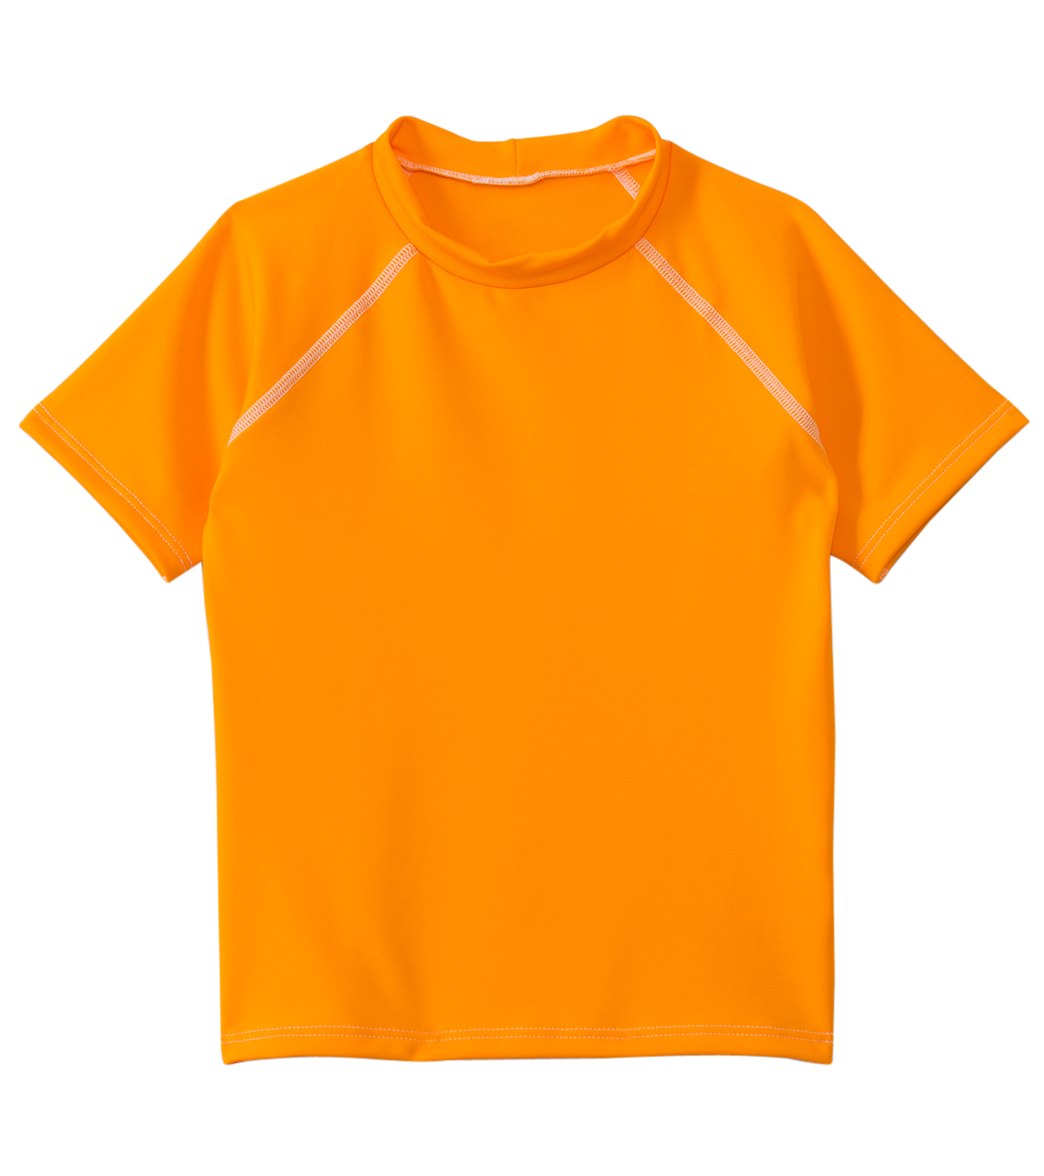 Dolfin Men's Kids' Rashguard 2T-7 - Orange 3T - Swimoutlet.com